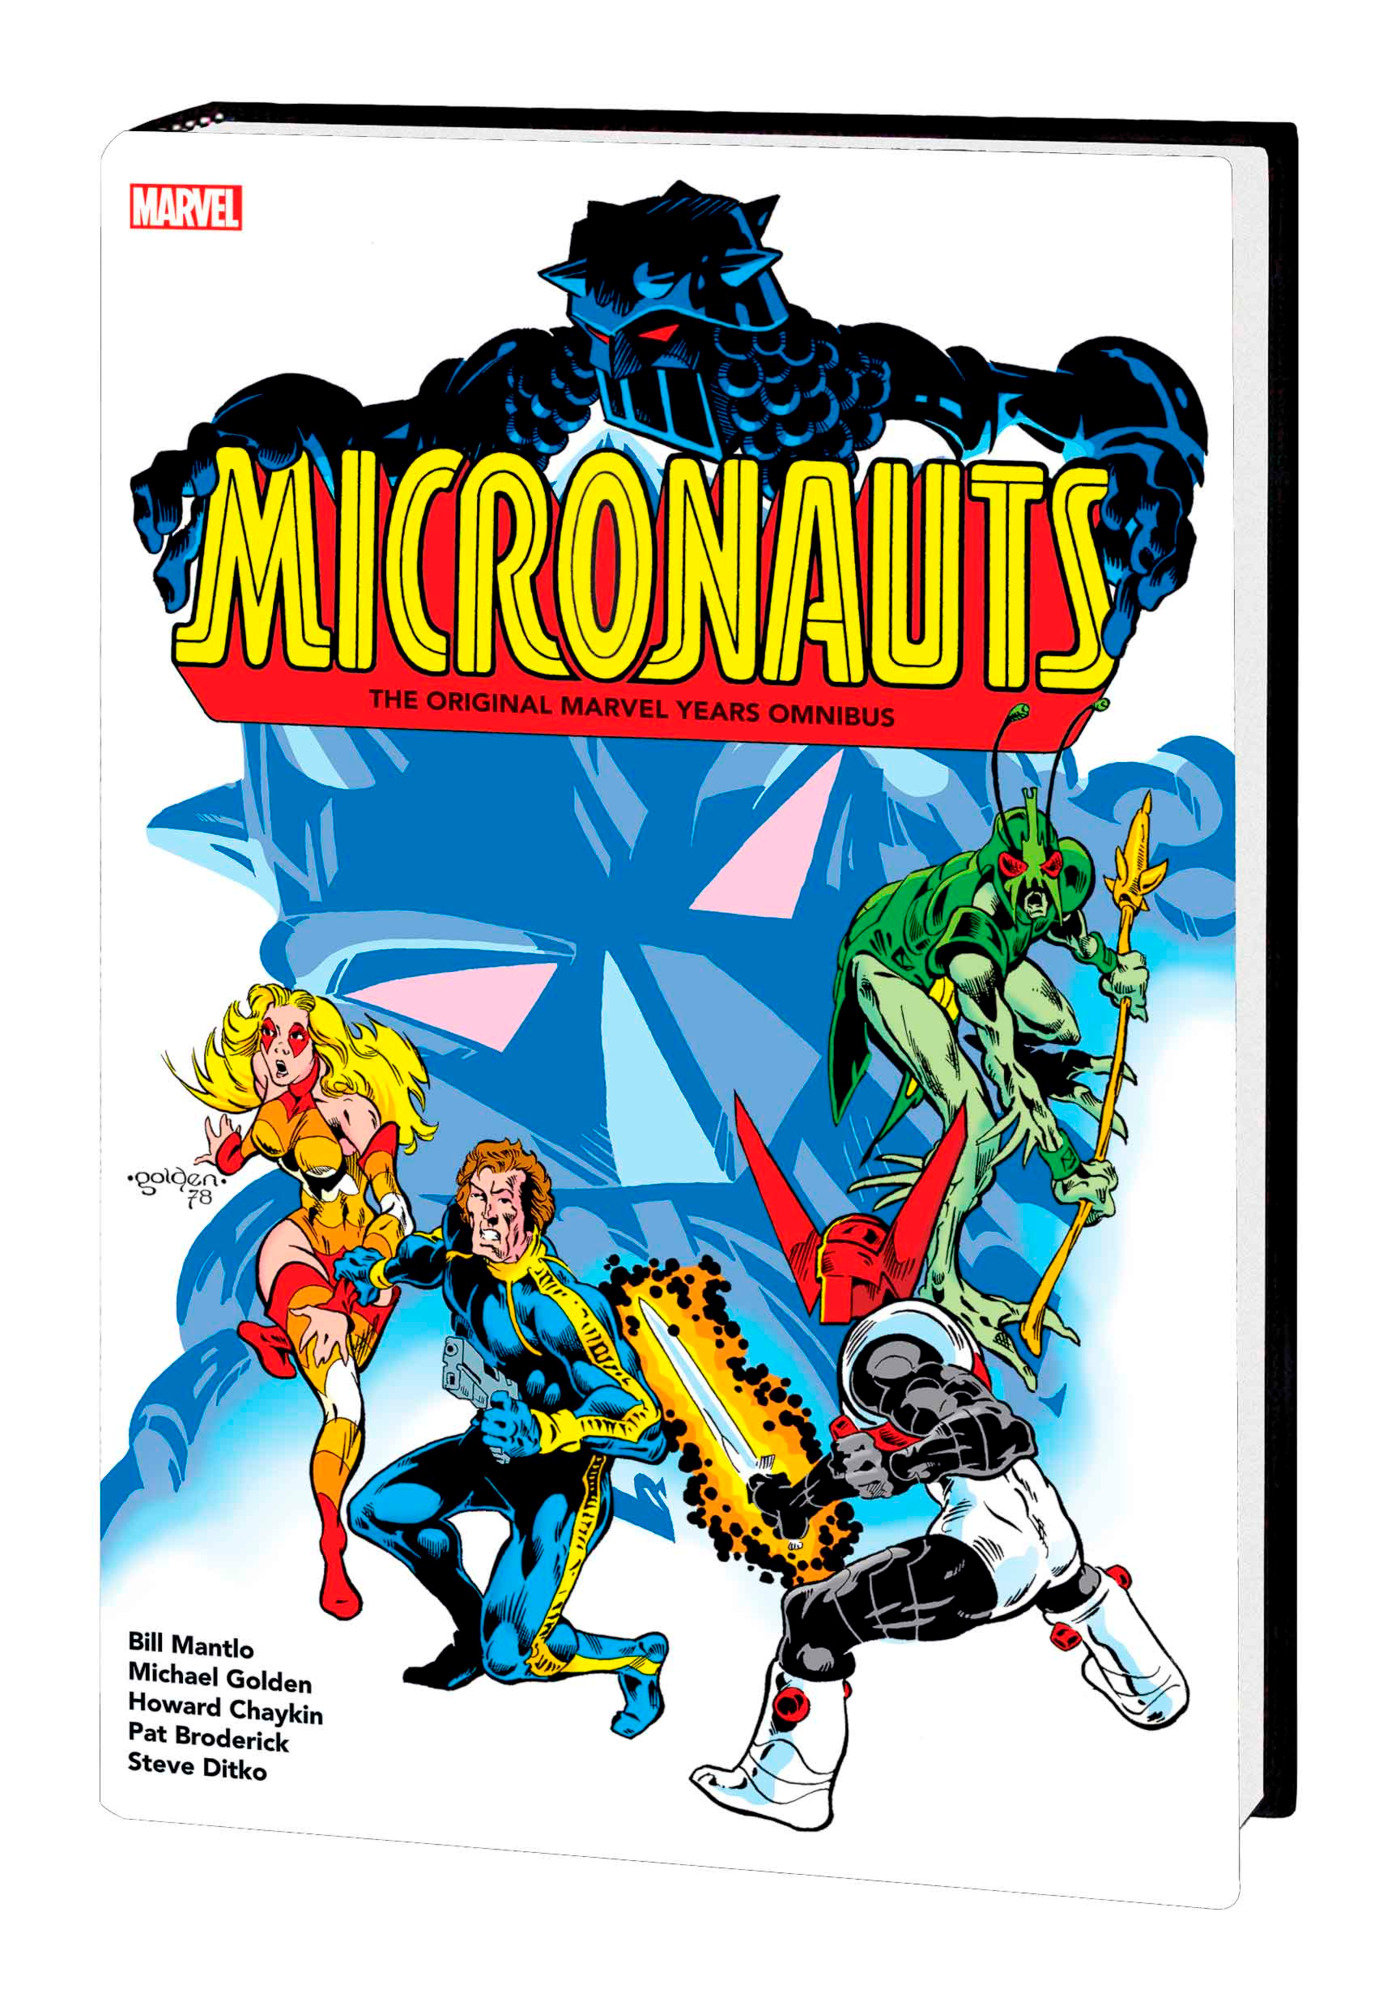 Micronauts: The Original Marvel Years Omnibus Hardcover Volume 1 Golden Cover (Direct Market Edition)